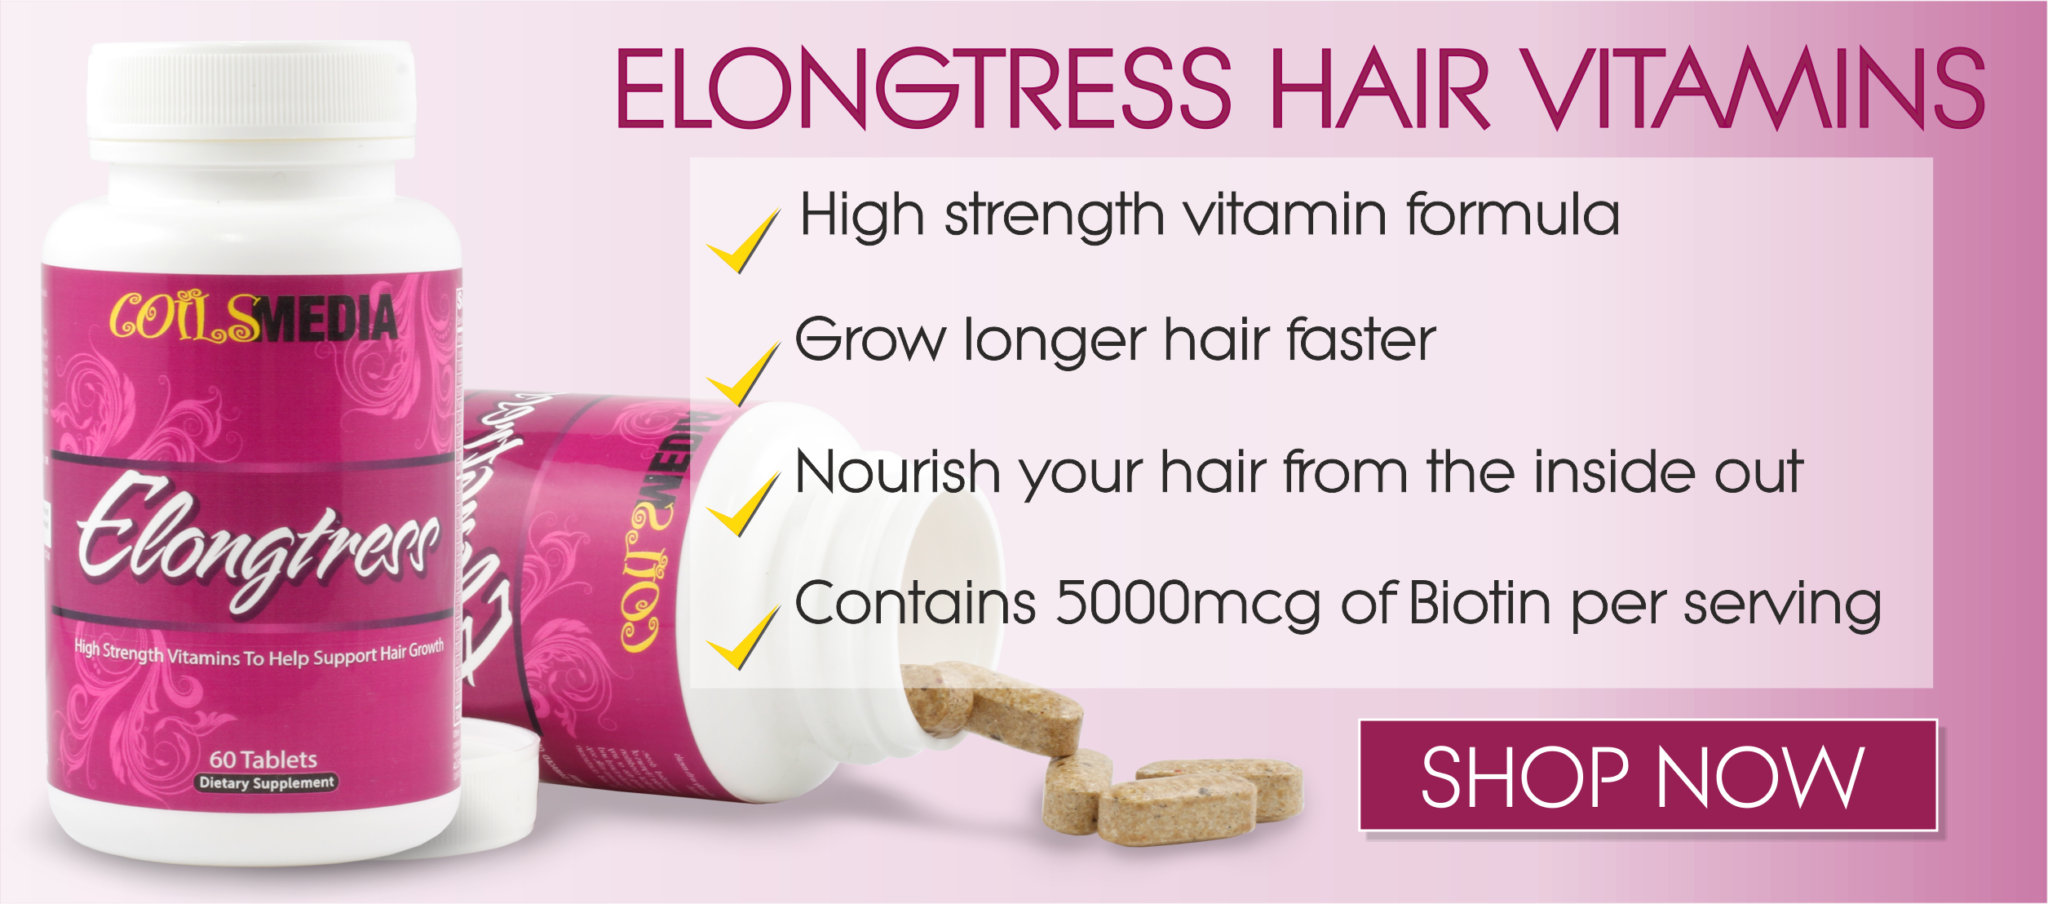 Elongtress hair vitamins